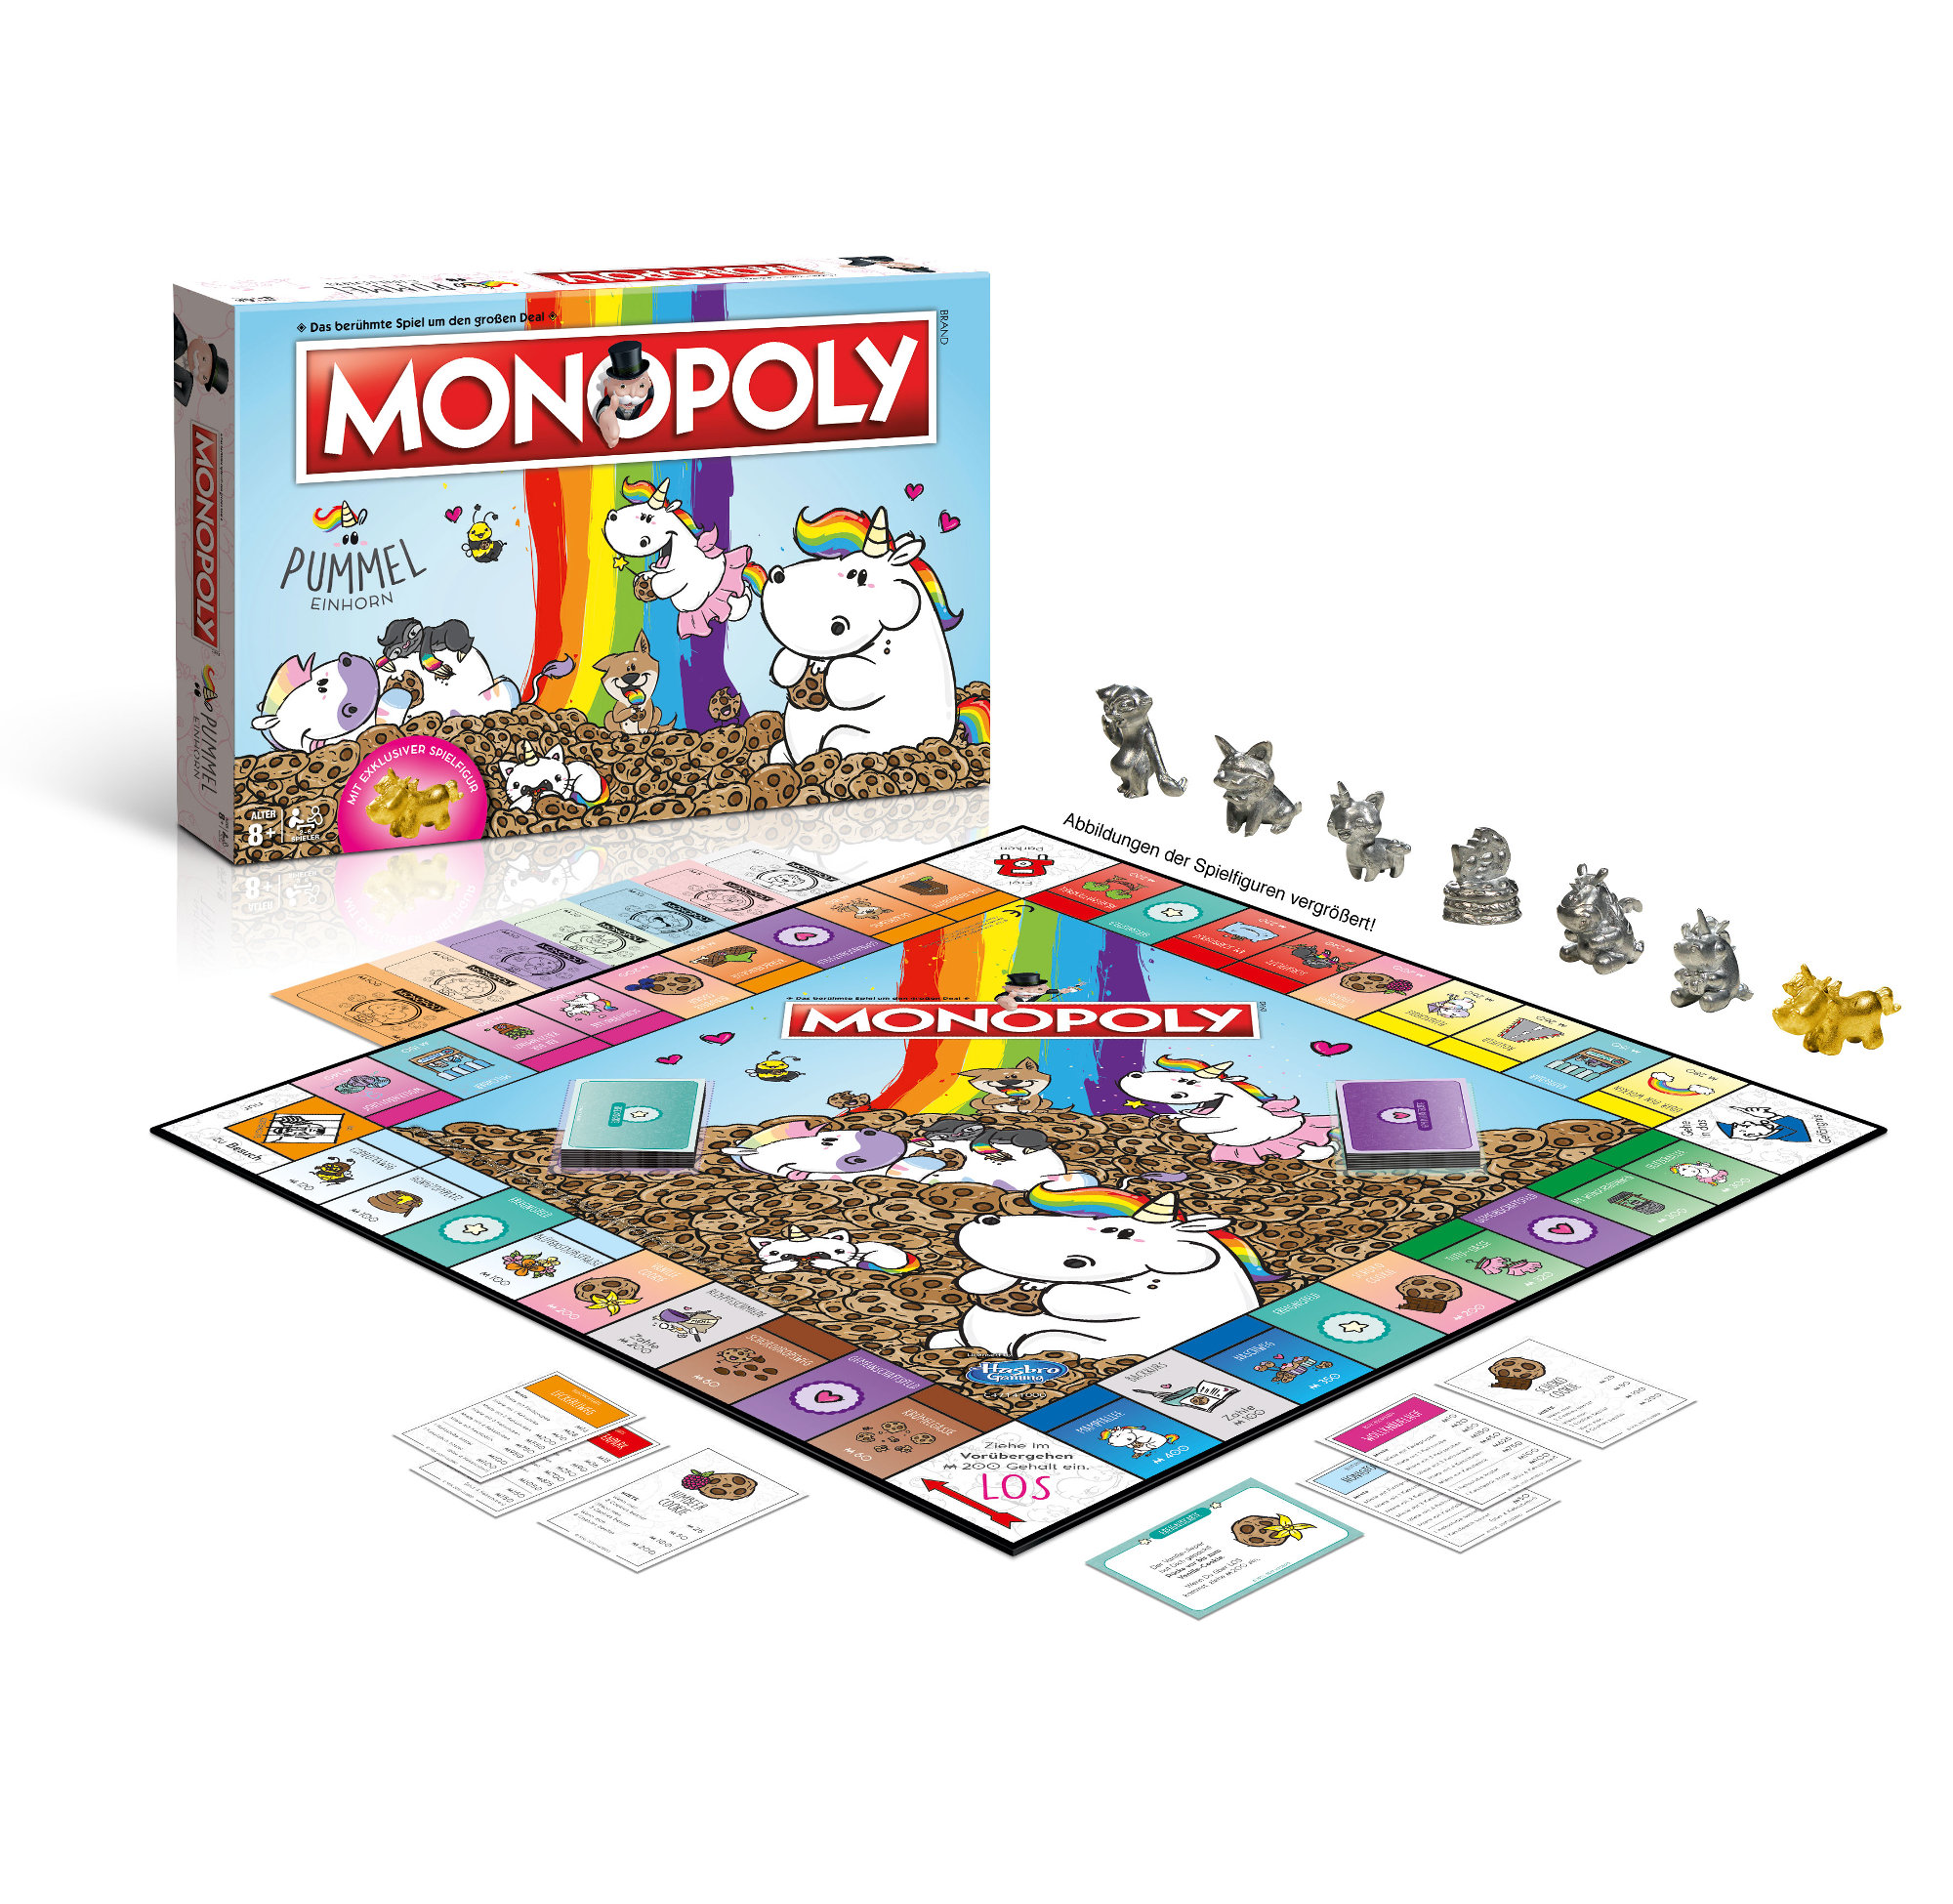 Monopoly Pummeleinhorn Collector's Edition (signiert)